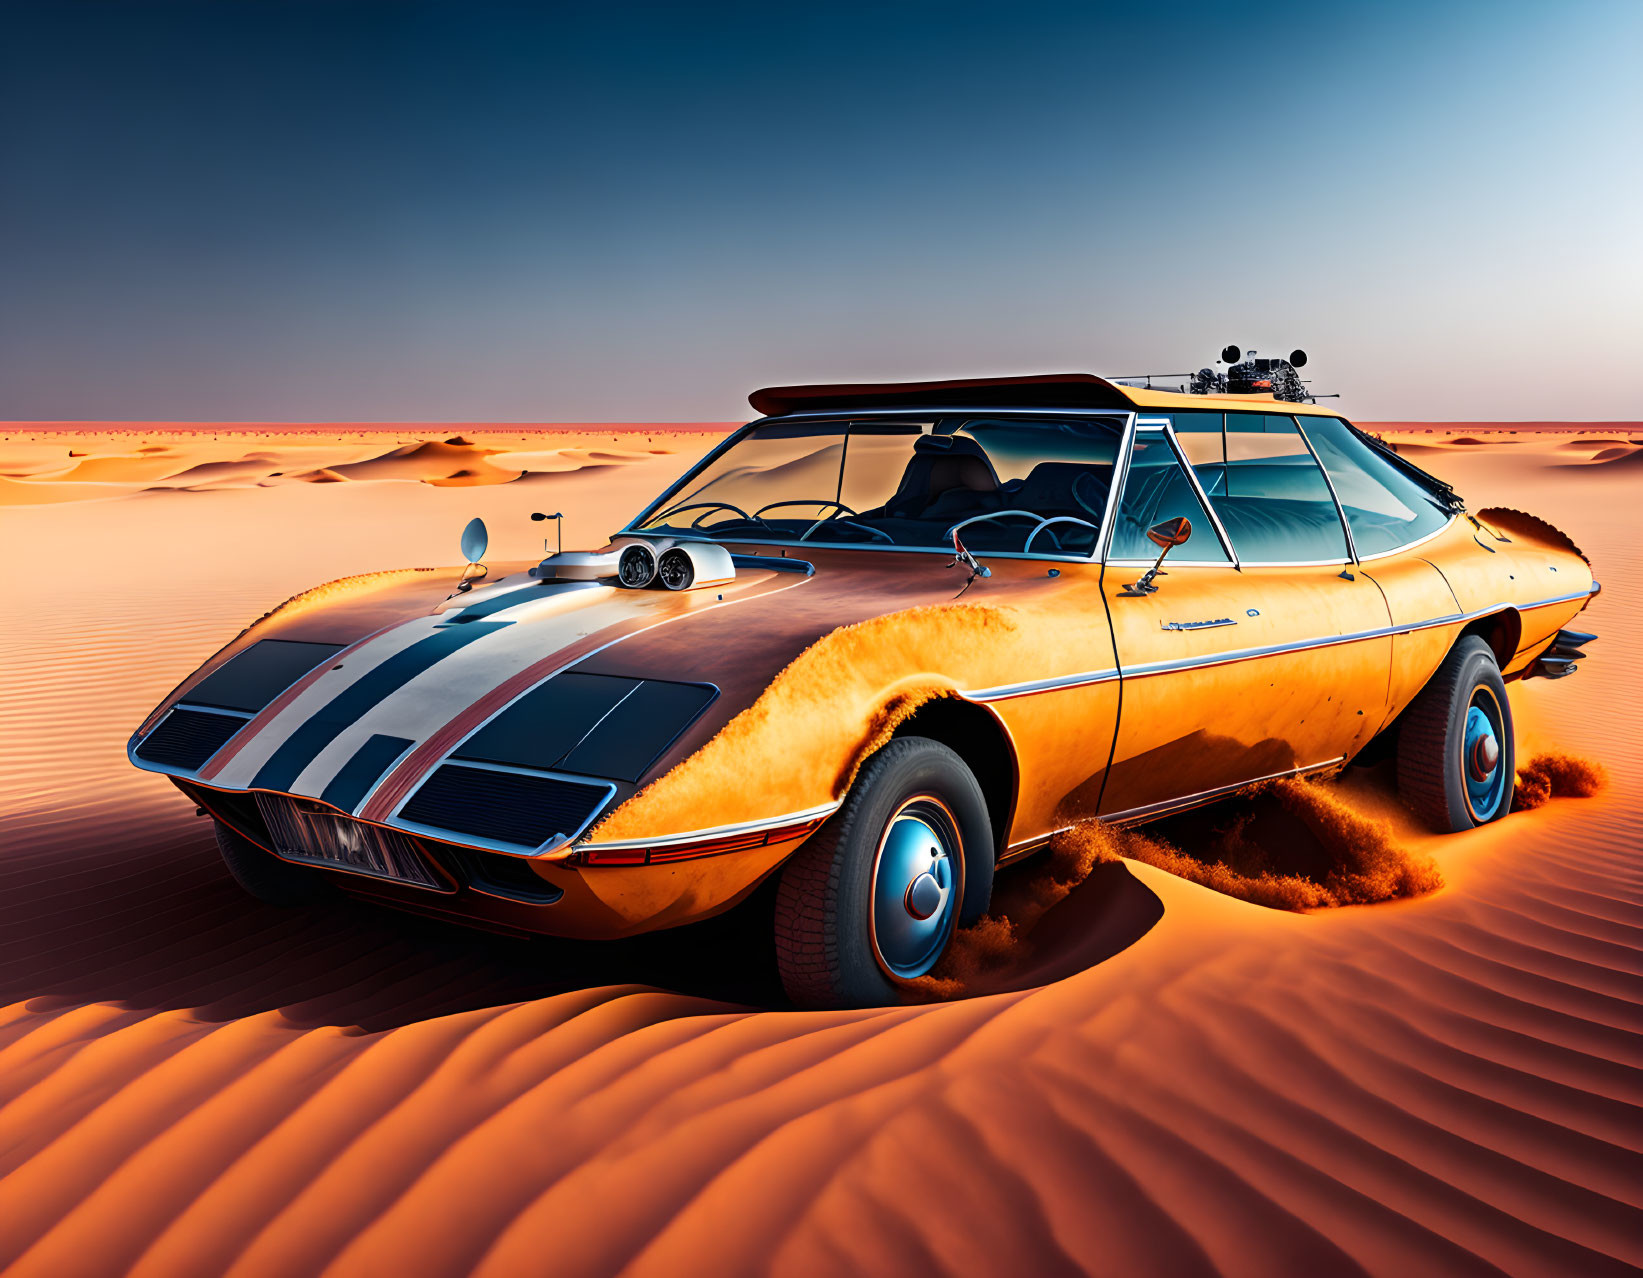 Vintage Orange Sports Car with Racing Stripes and Custom Equipment on Desert Dune